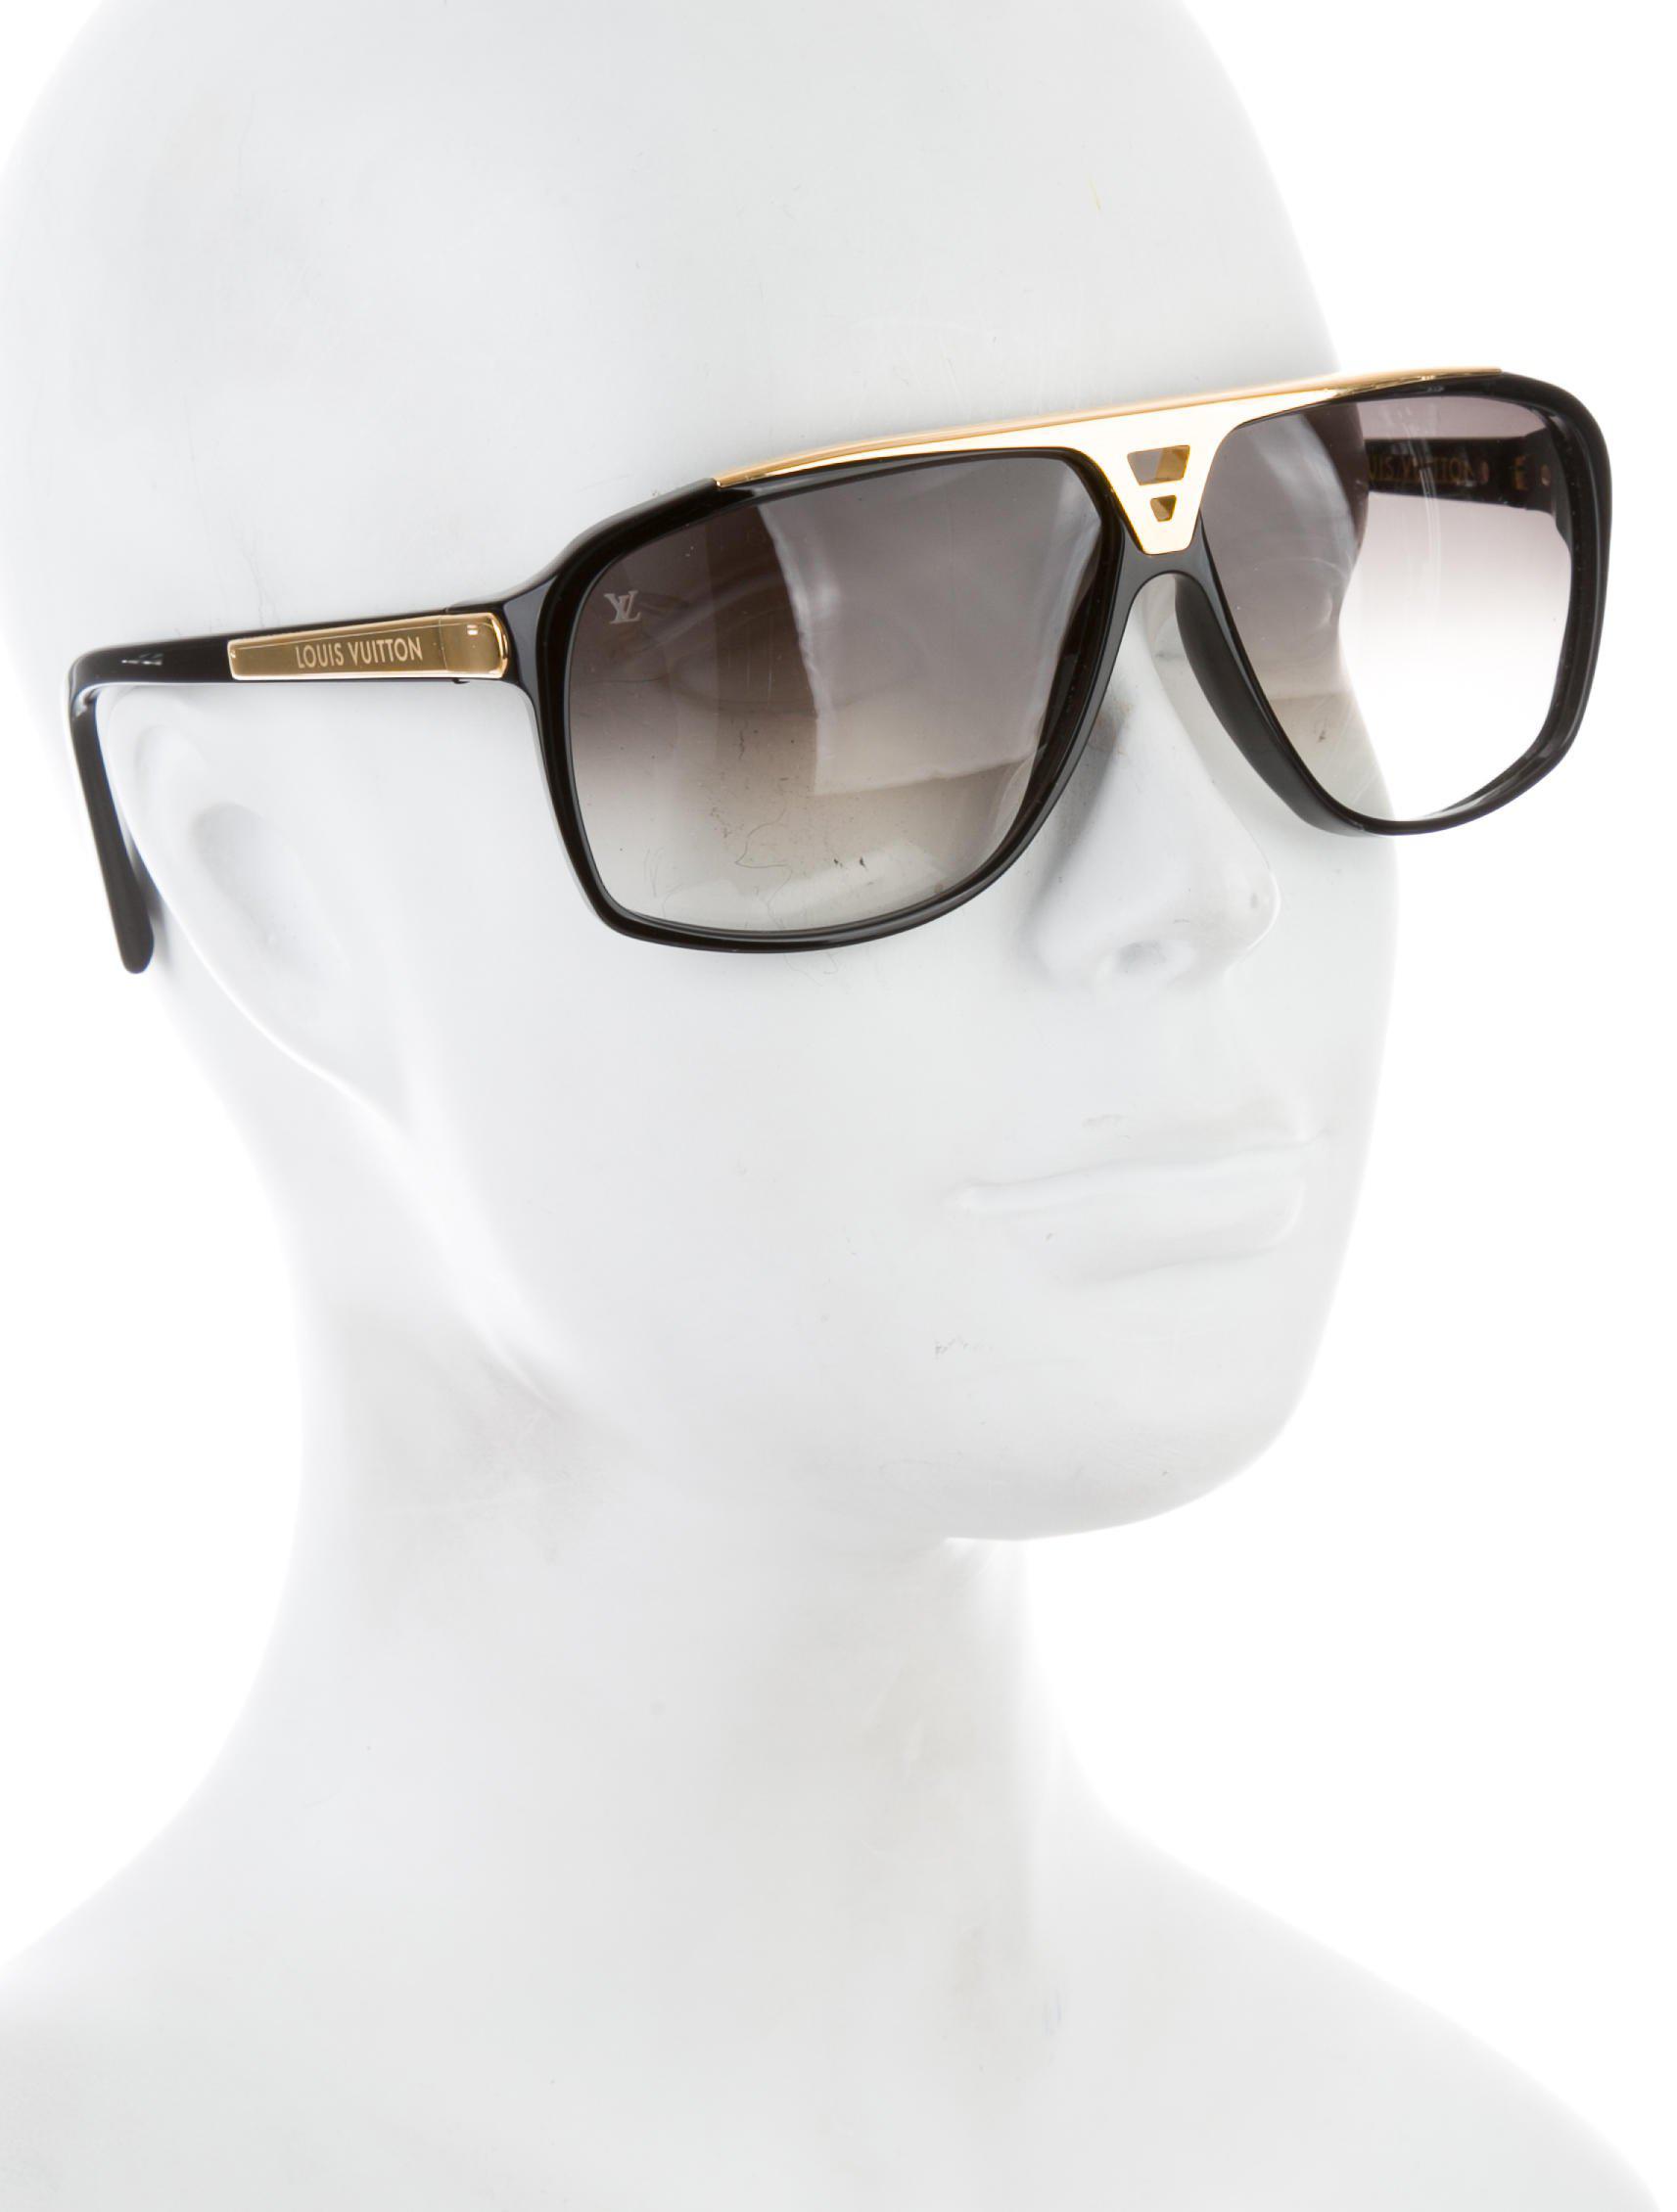 Lyst - Louis Vuitton Evidence Aviator Sunglasses Black in Metallic